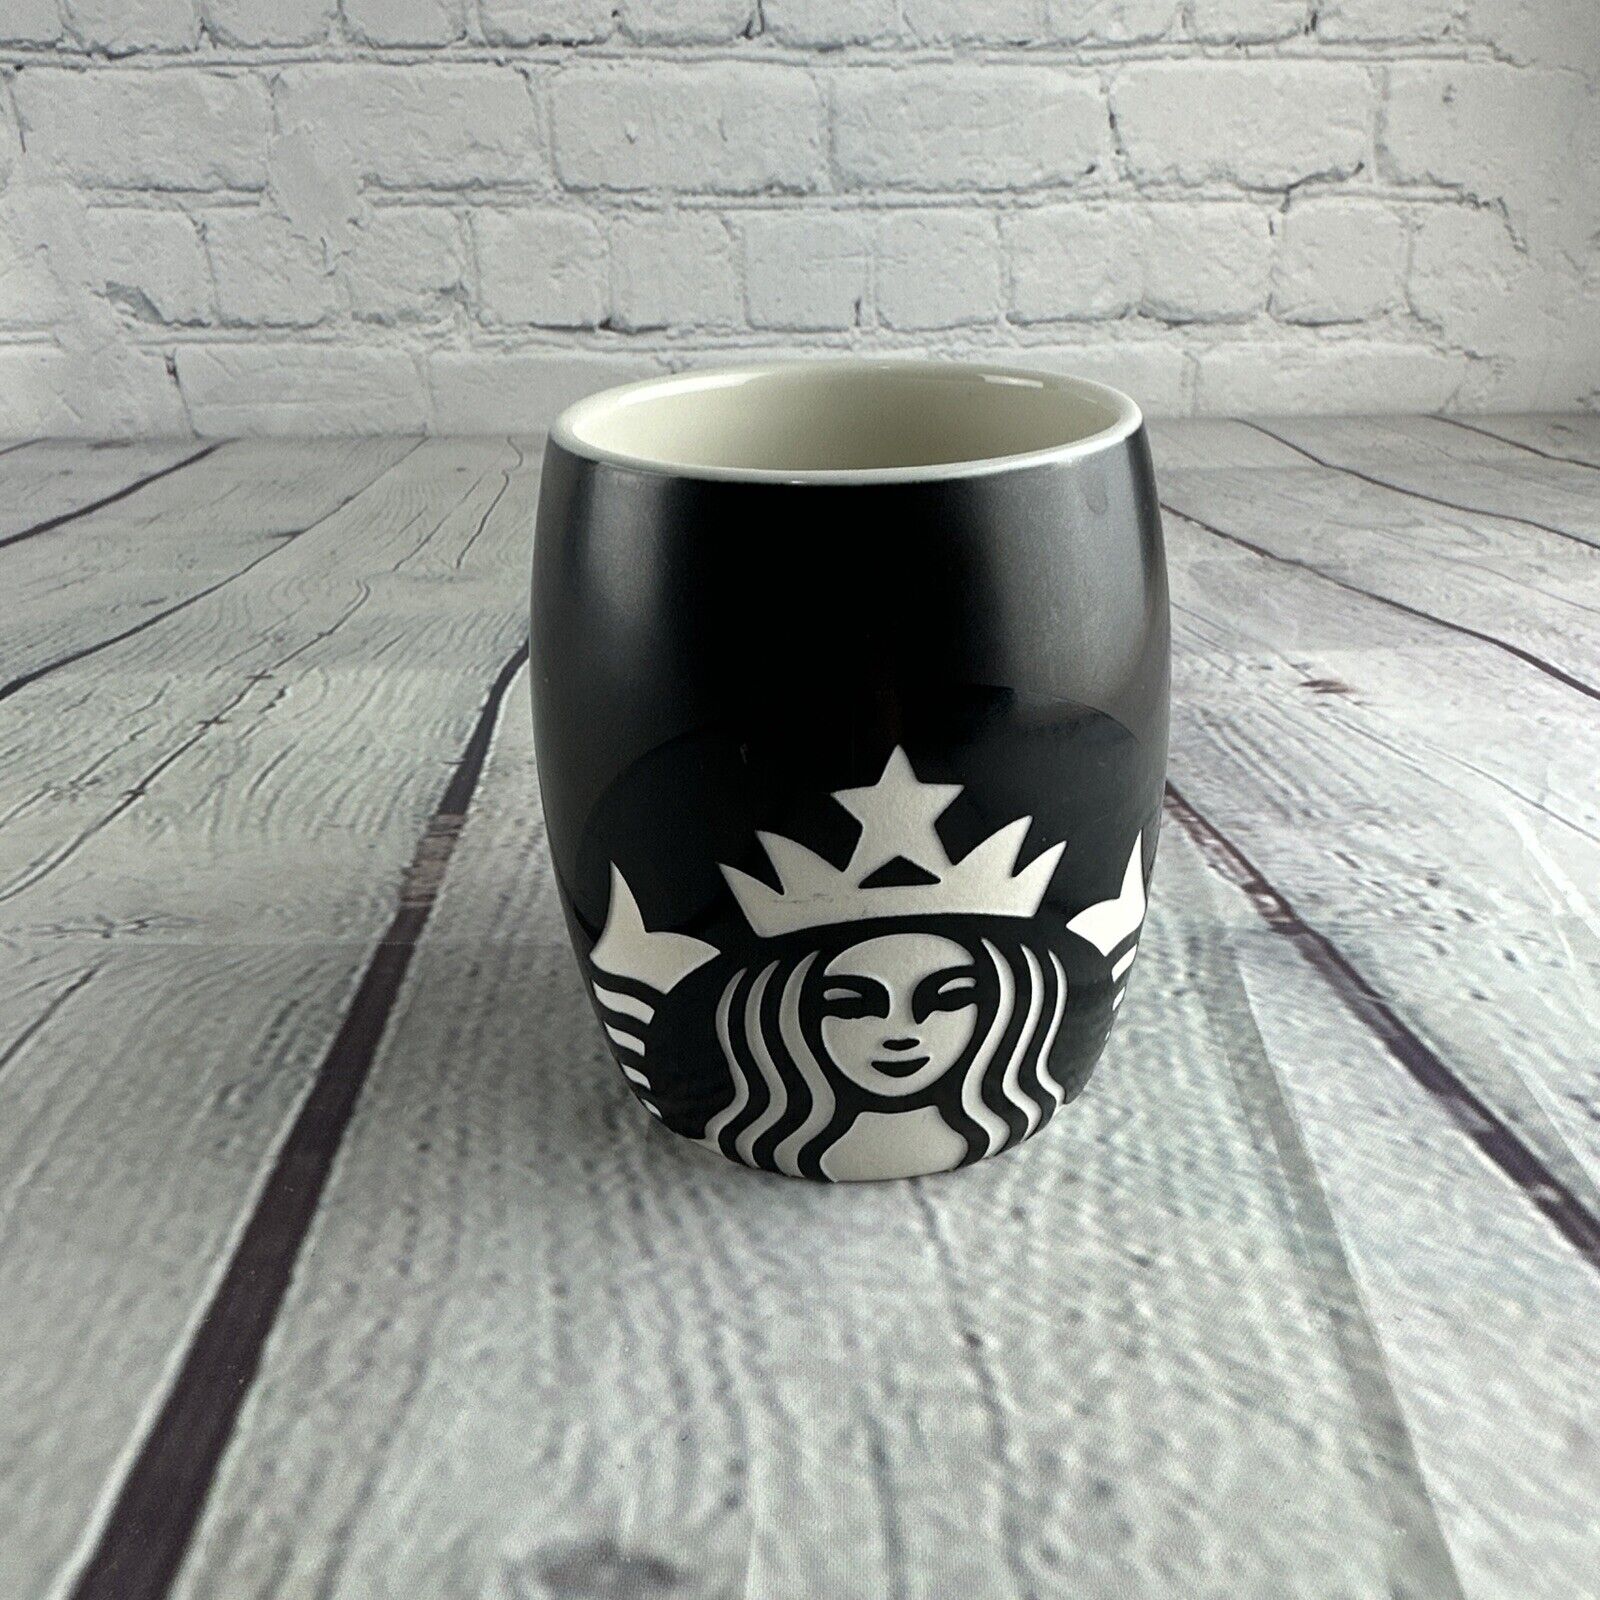 Starbucks Coffee Mug 2011 Black White Etched Mermaid Logo Siren Cup Barrel